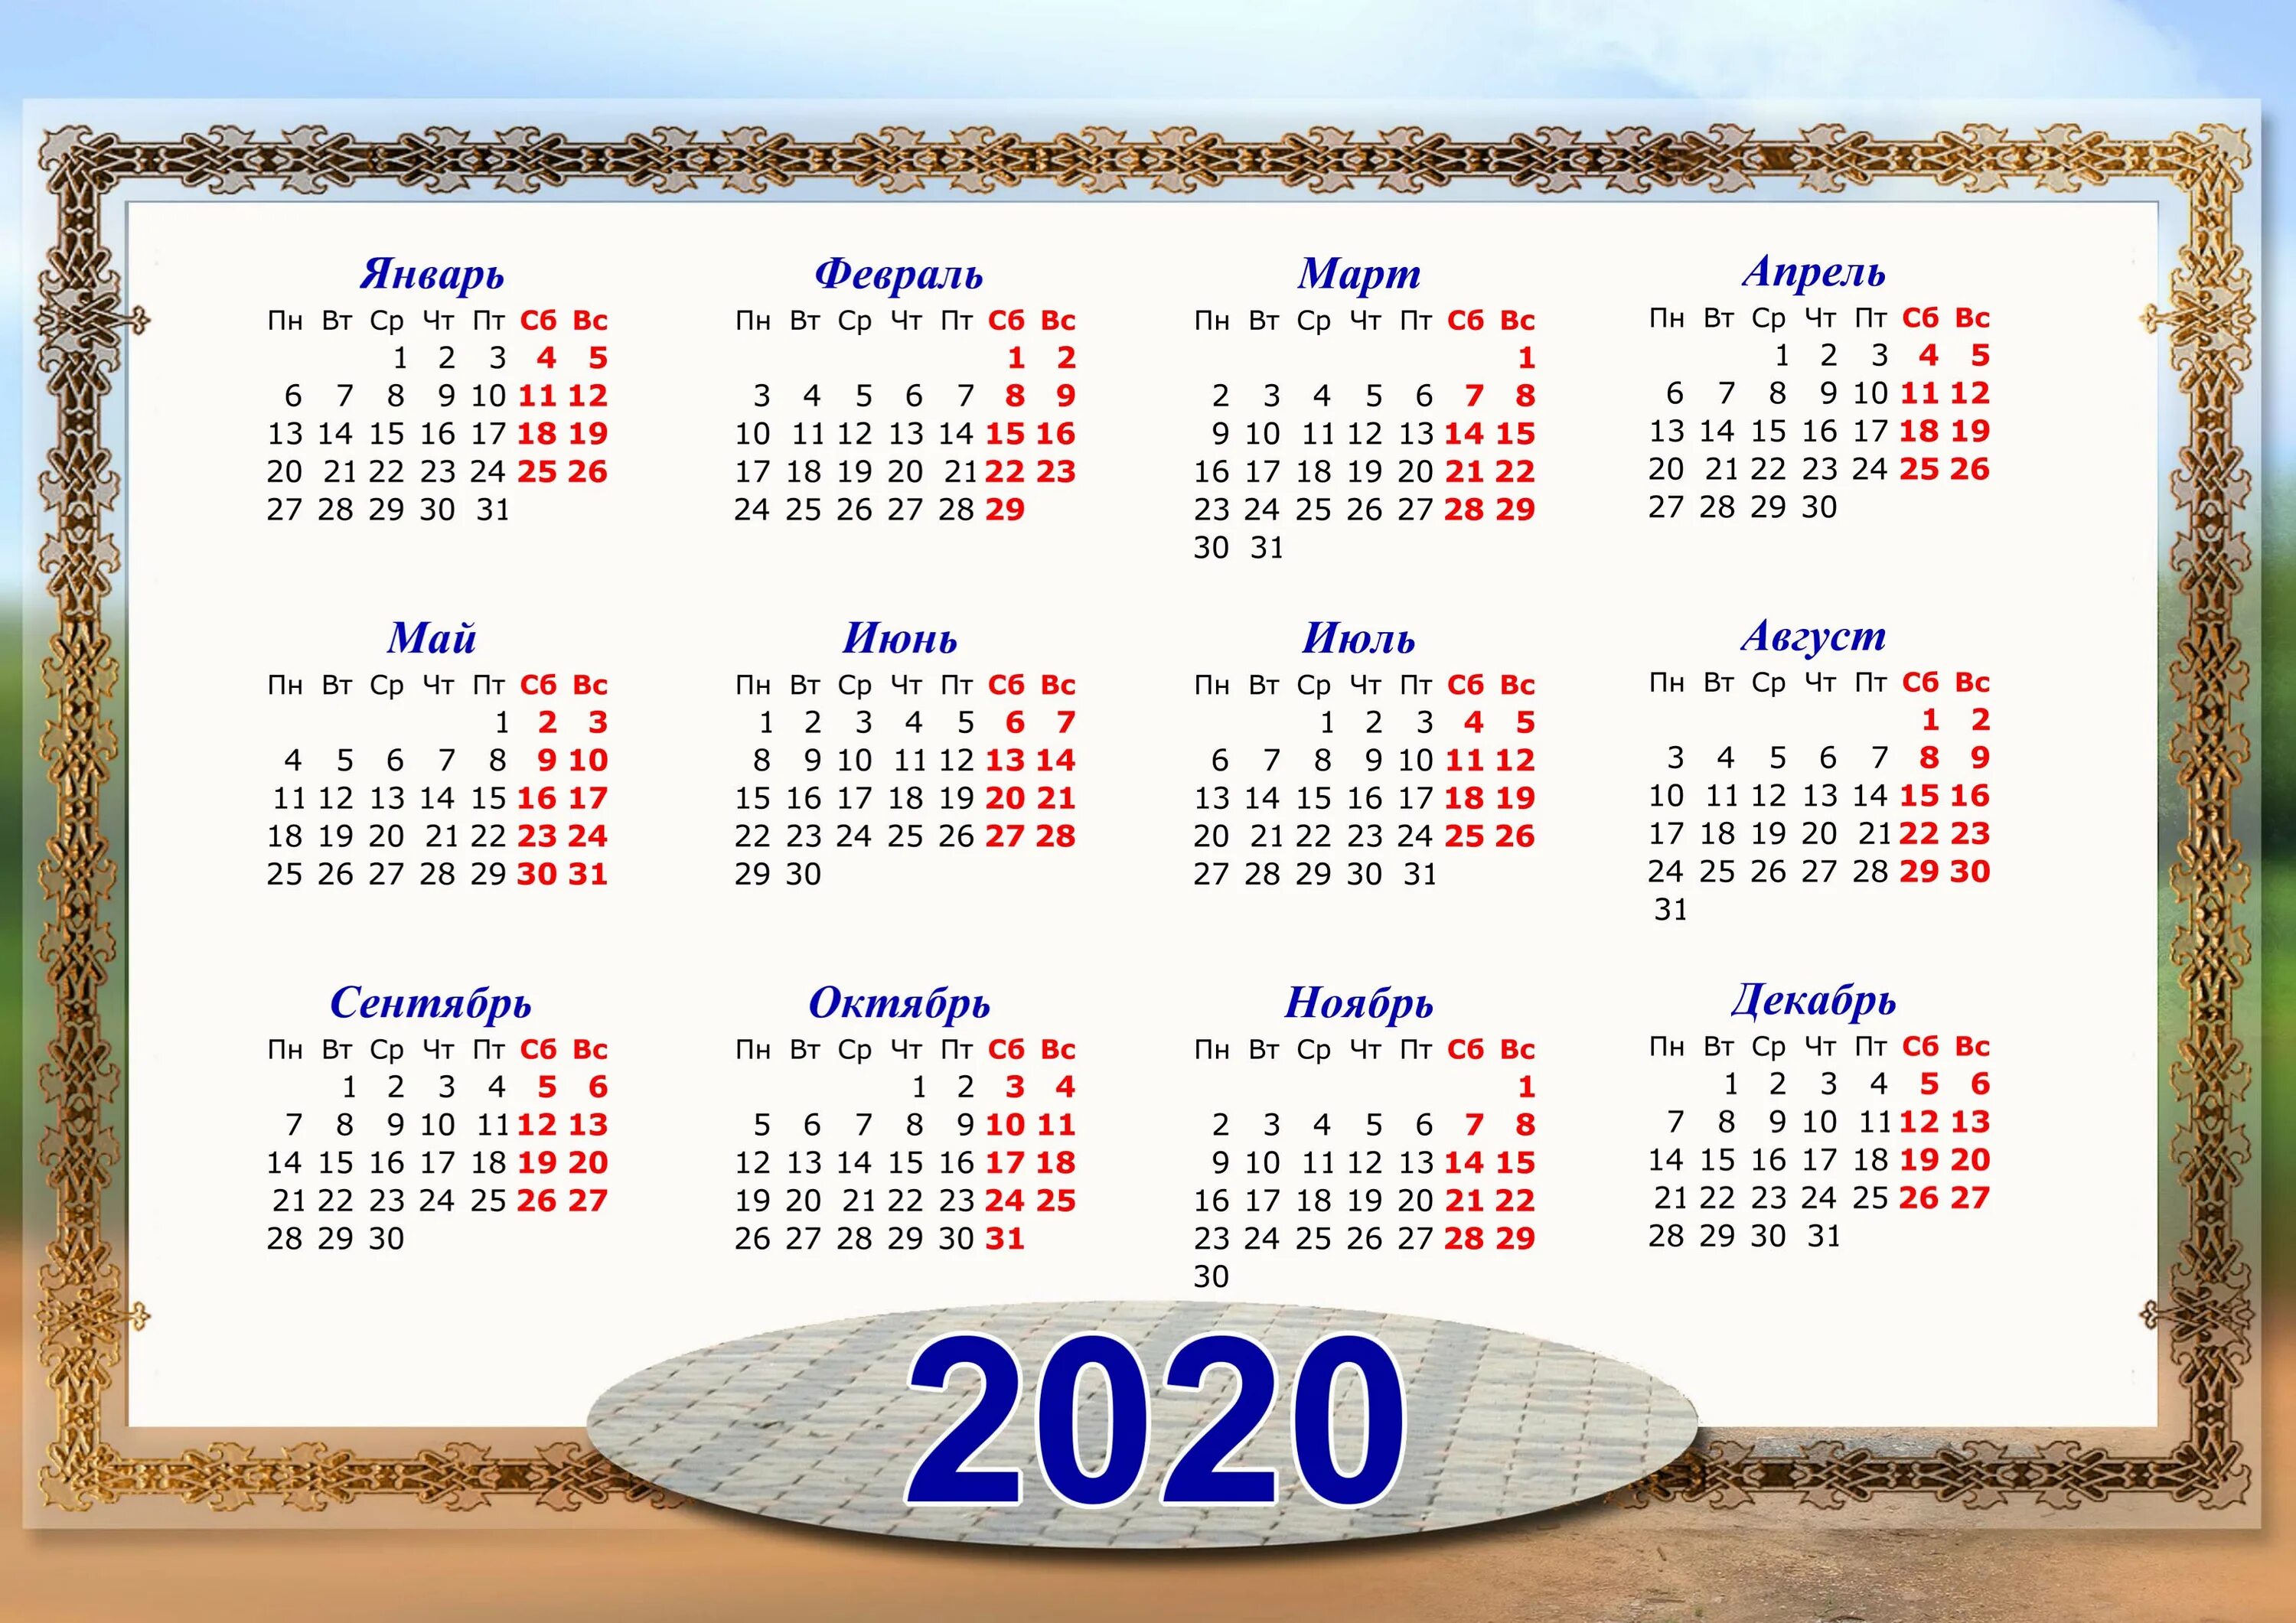 Календарь. Календарь 2020. Календарь за прошлый год. Календарь на 2020 год. Календарь 2020 год россия